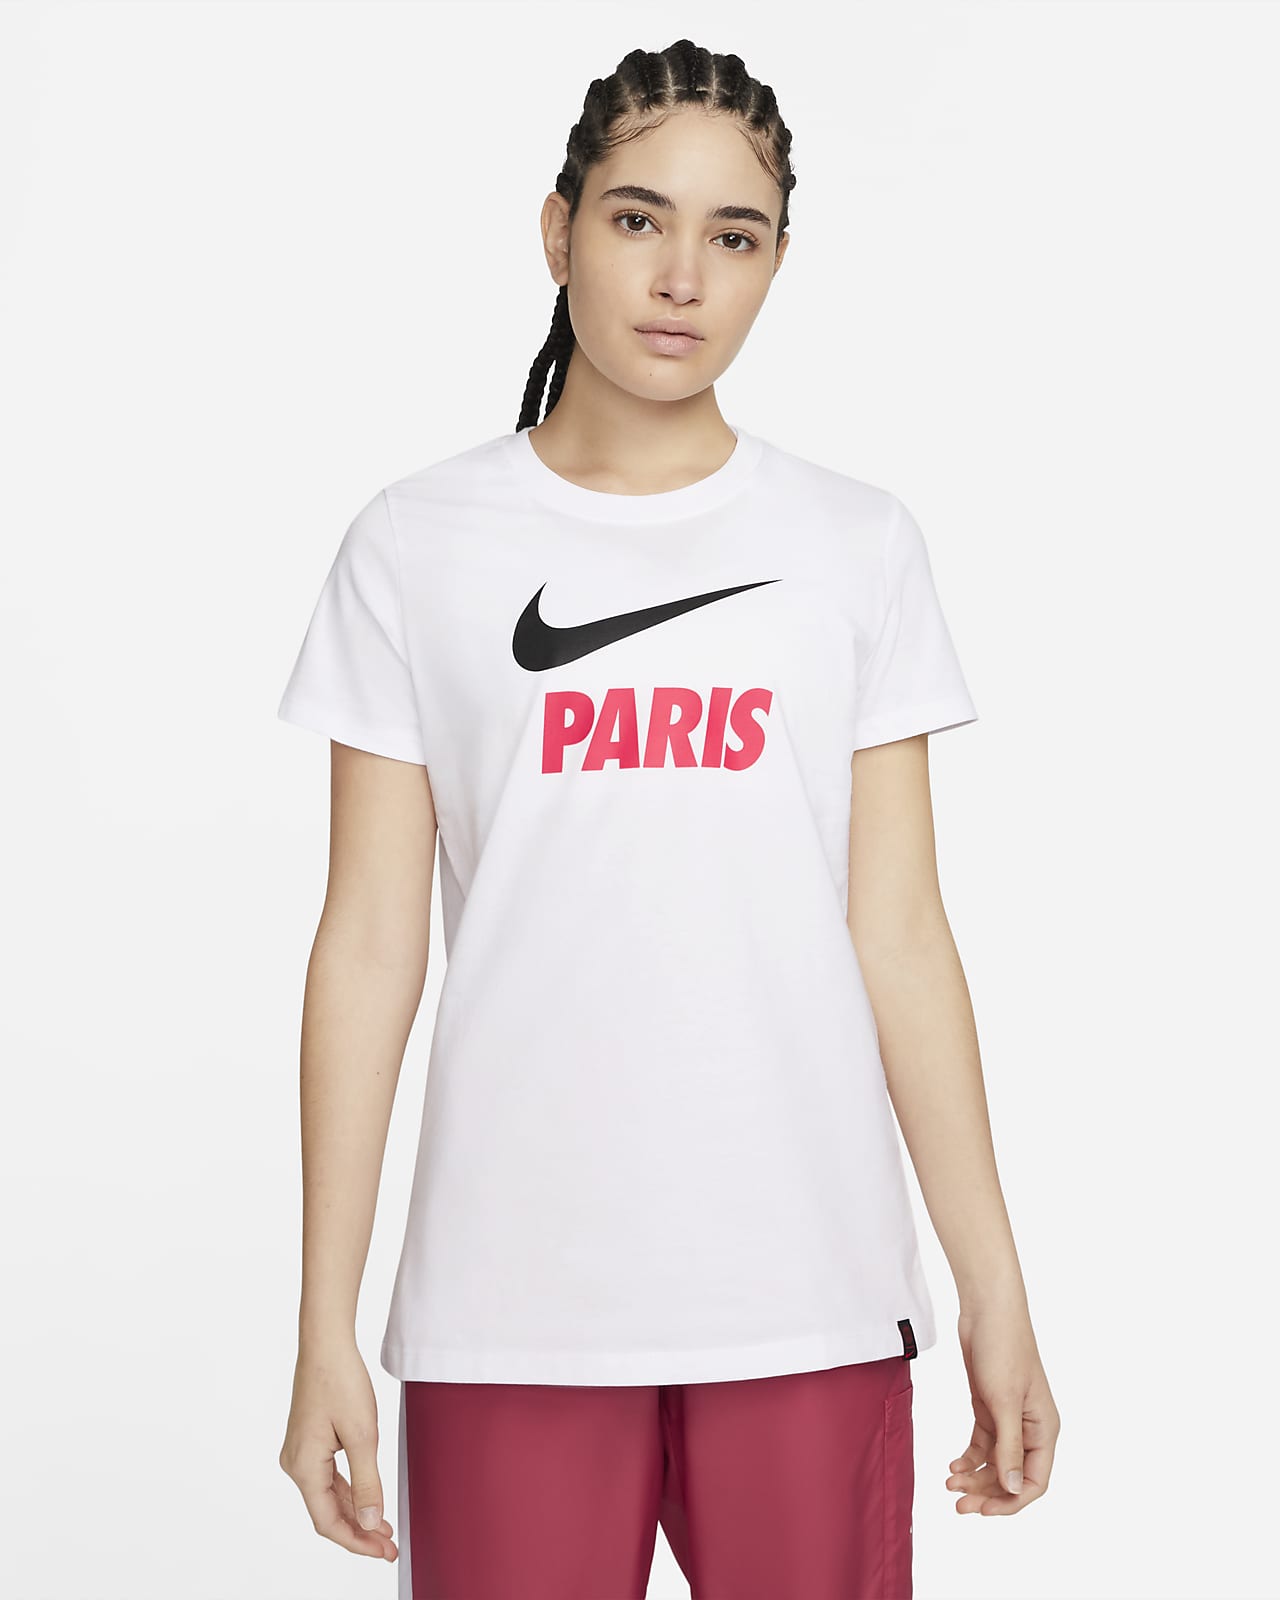 Nike Париж. Paris Nike футболка женская. Футболка найк PSG. Футболка Париж найк Буда.